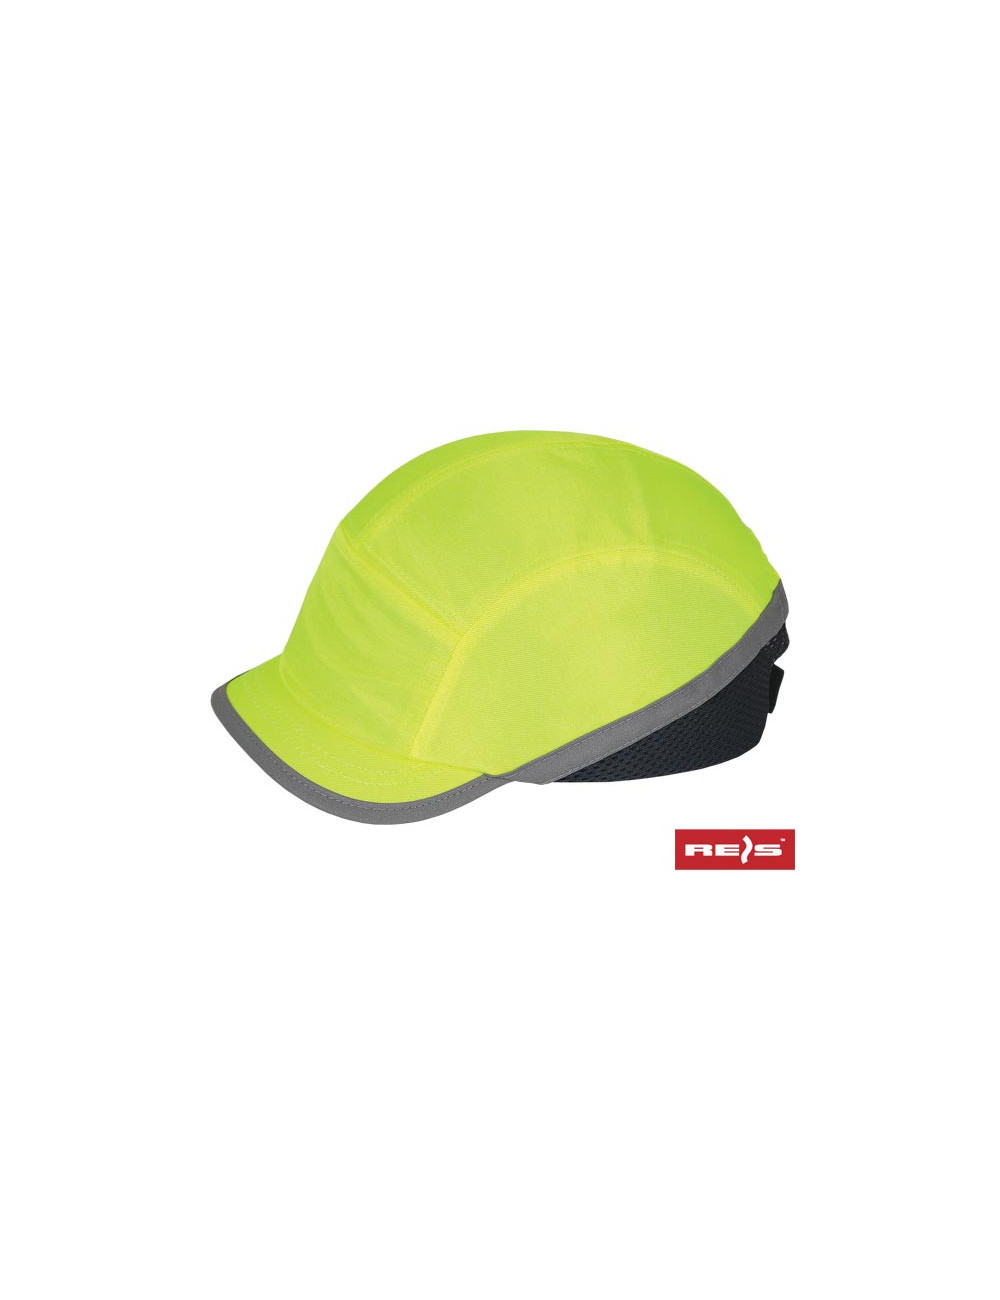 Industrial light helmet bumpscapfluo se celadine Reis